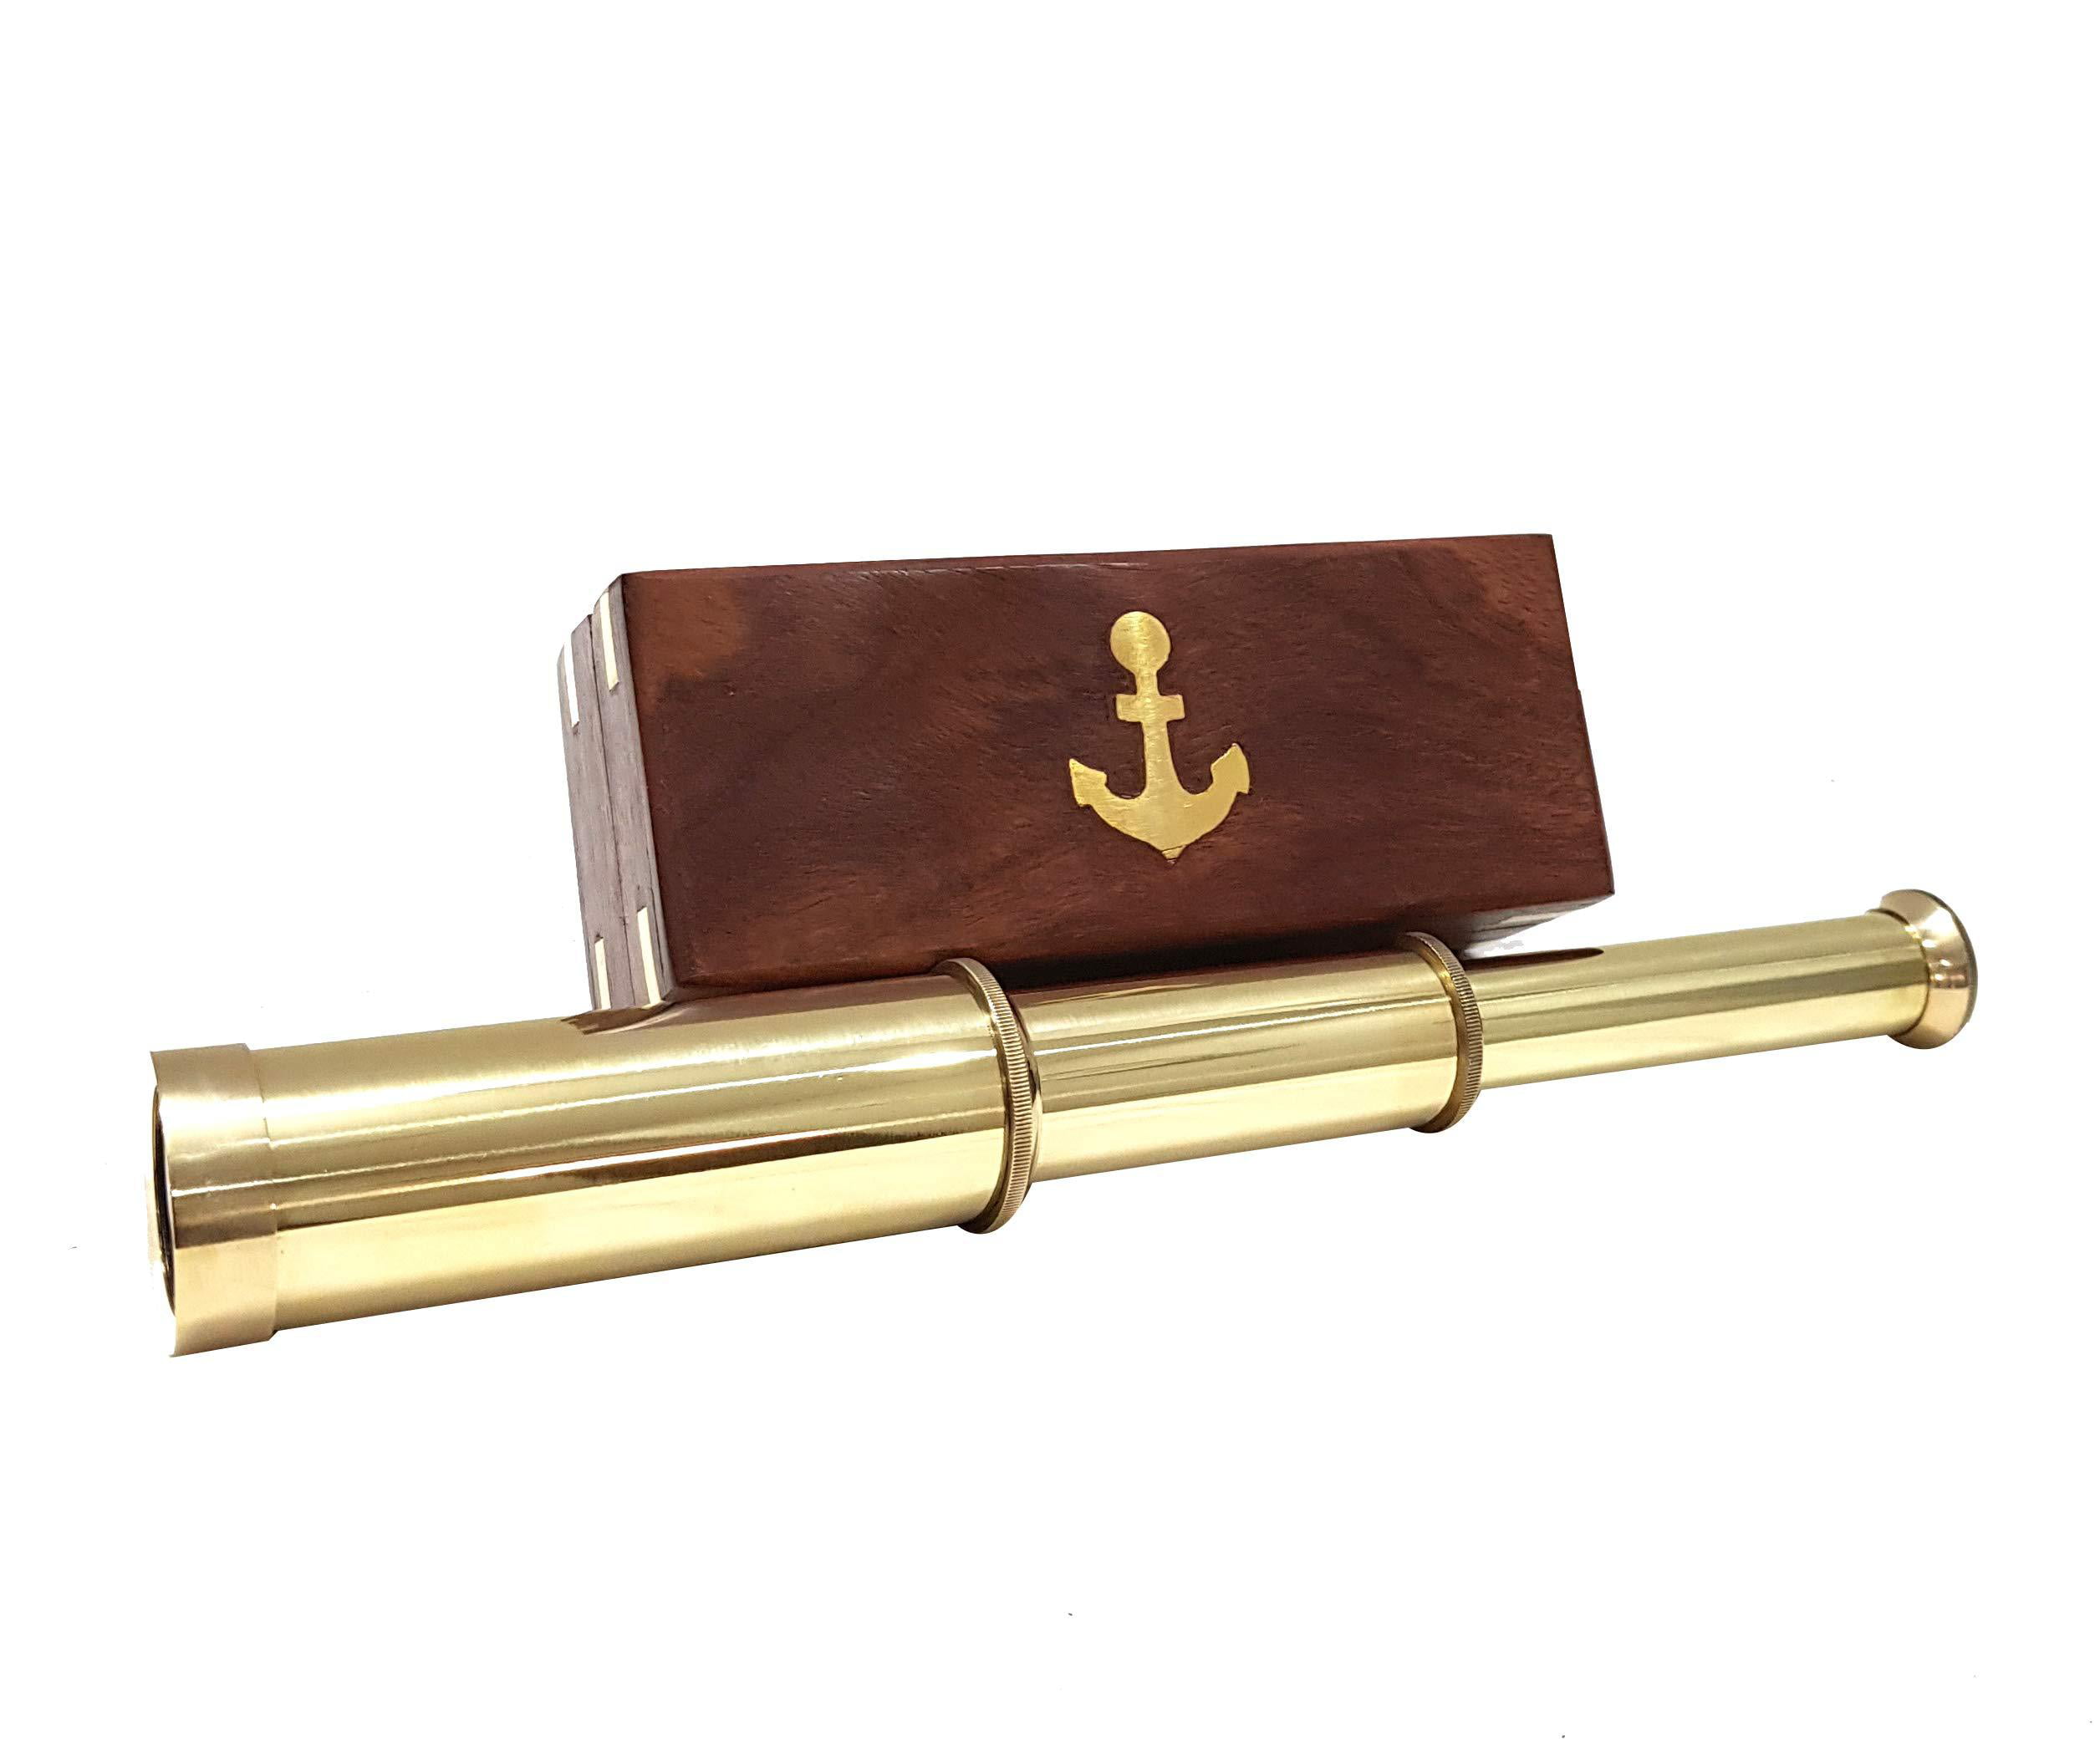 Details about   Full Brass Polish Finish Nautical Marine Spyglass Telescope w Wooden Box 